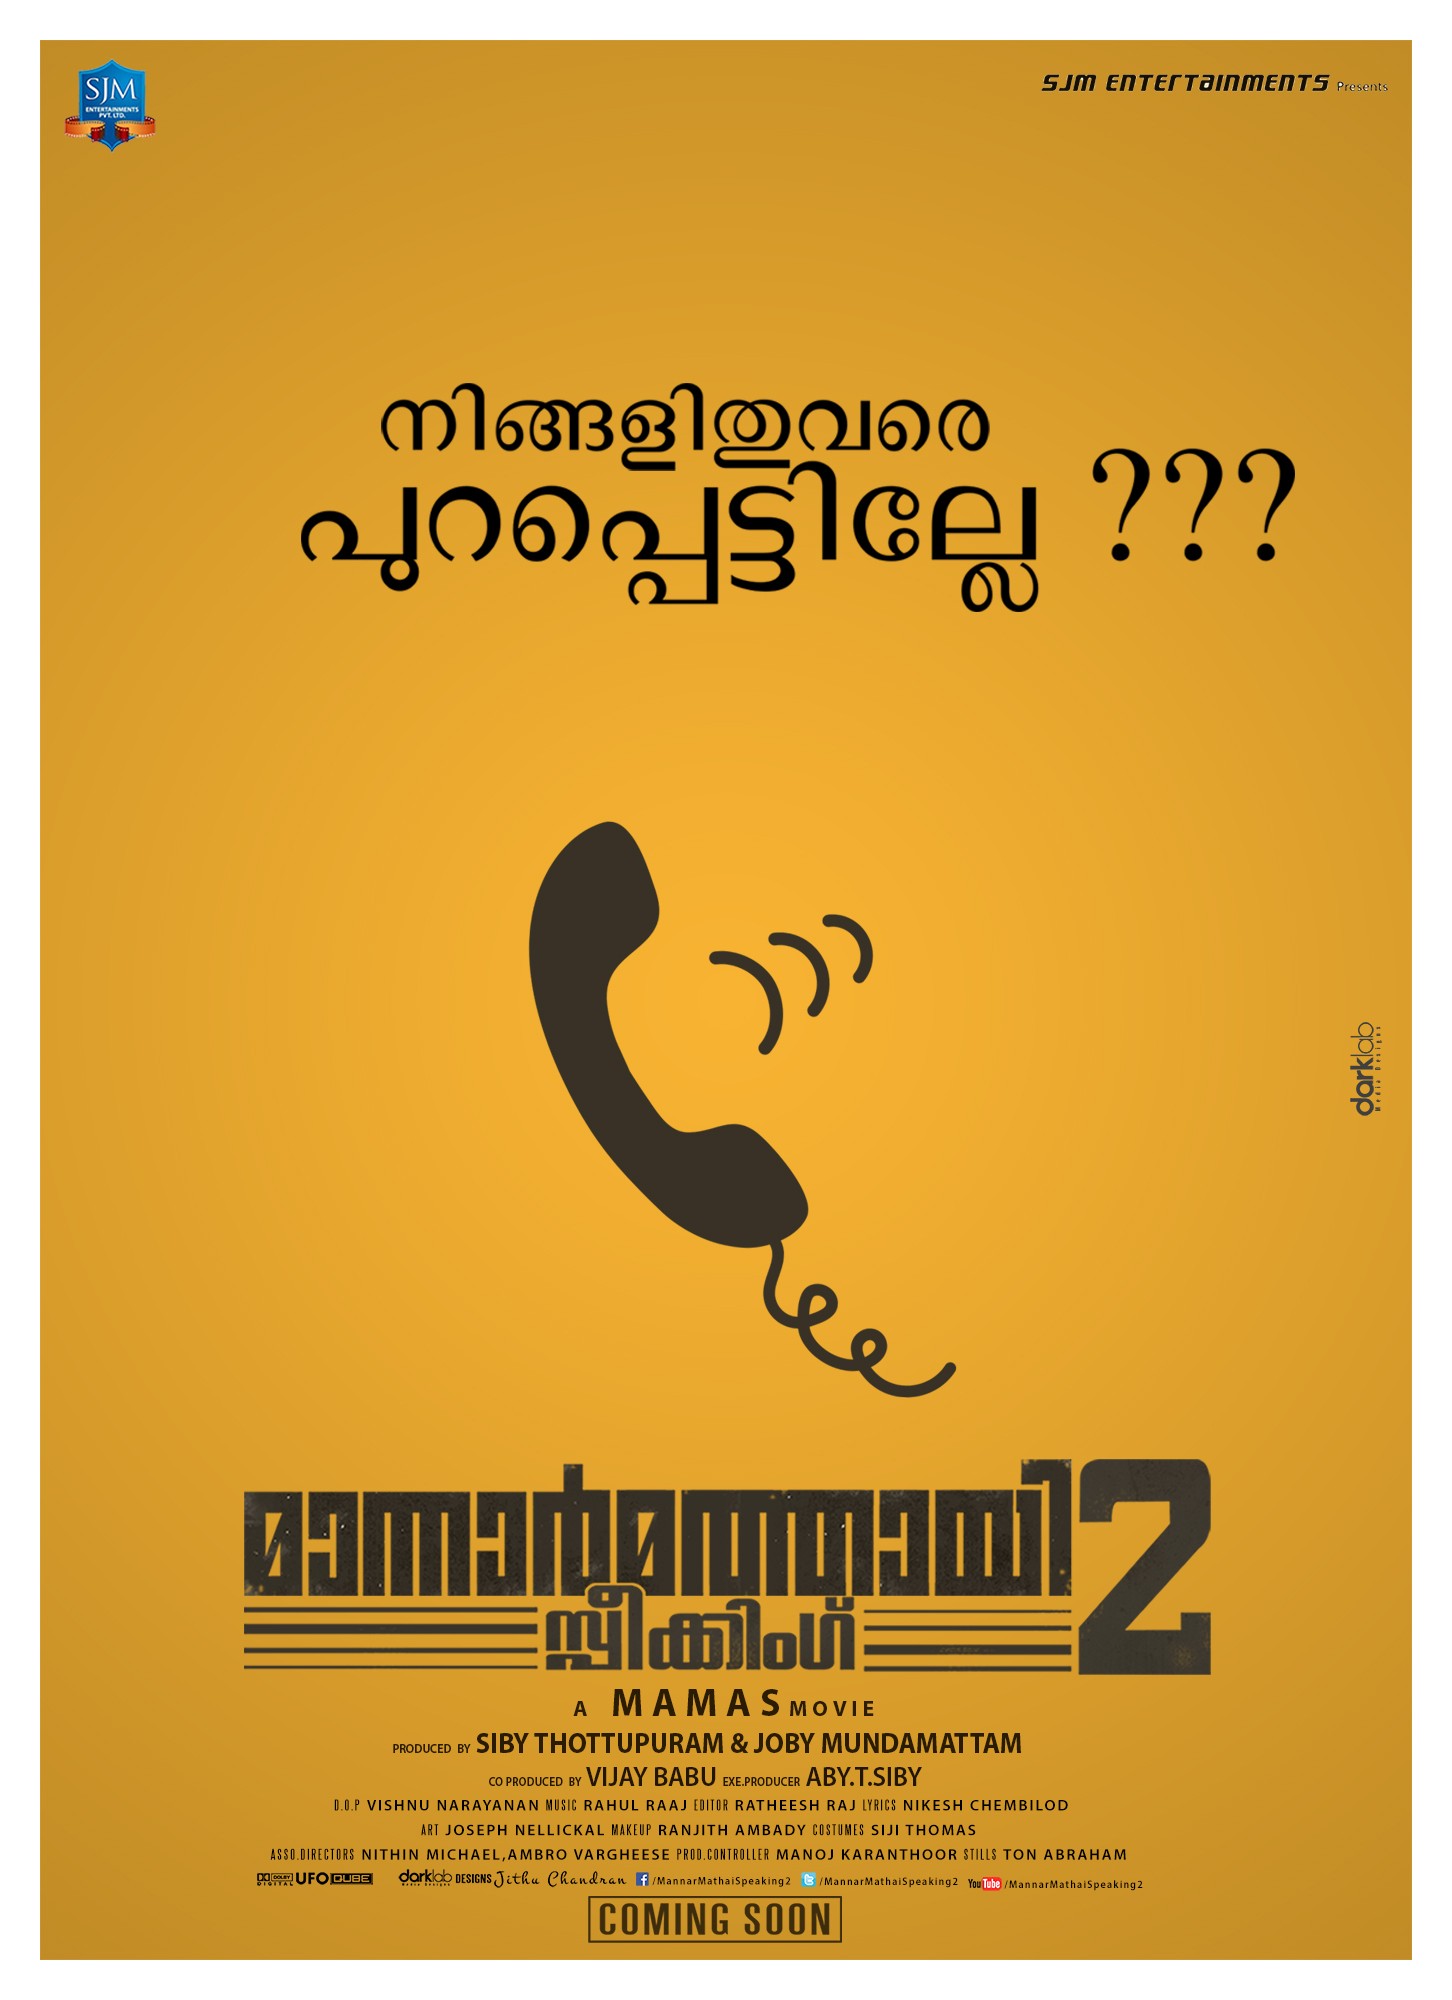 Mega Sized Movie Poster Image for Mannar Mathai Speaking 2 (#12 of 29)